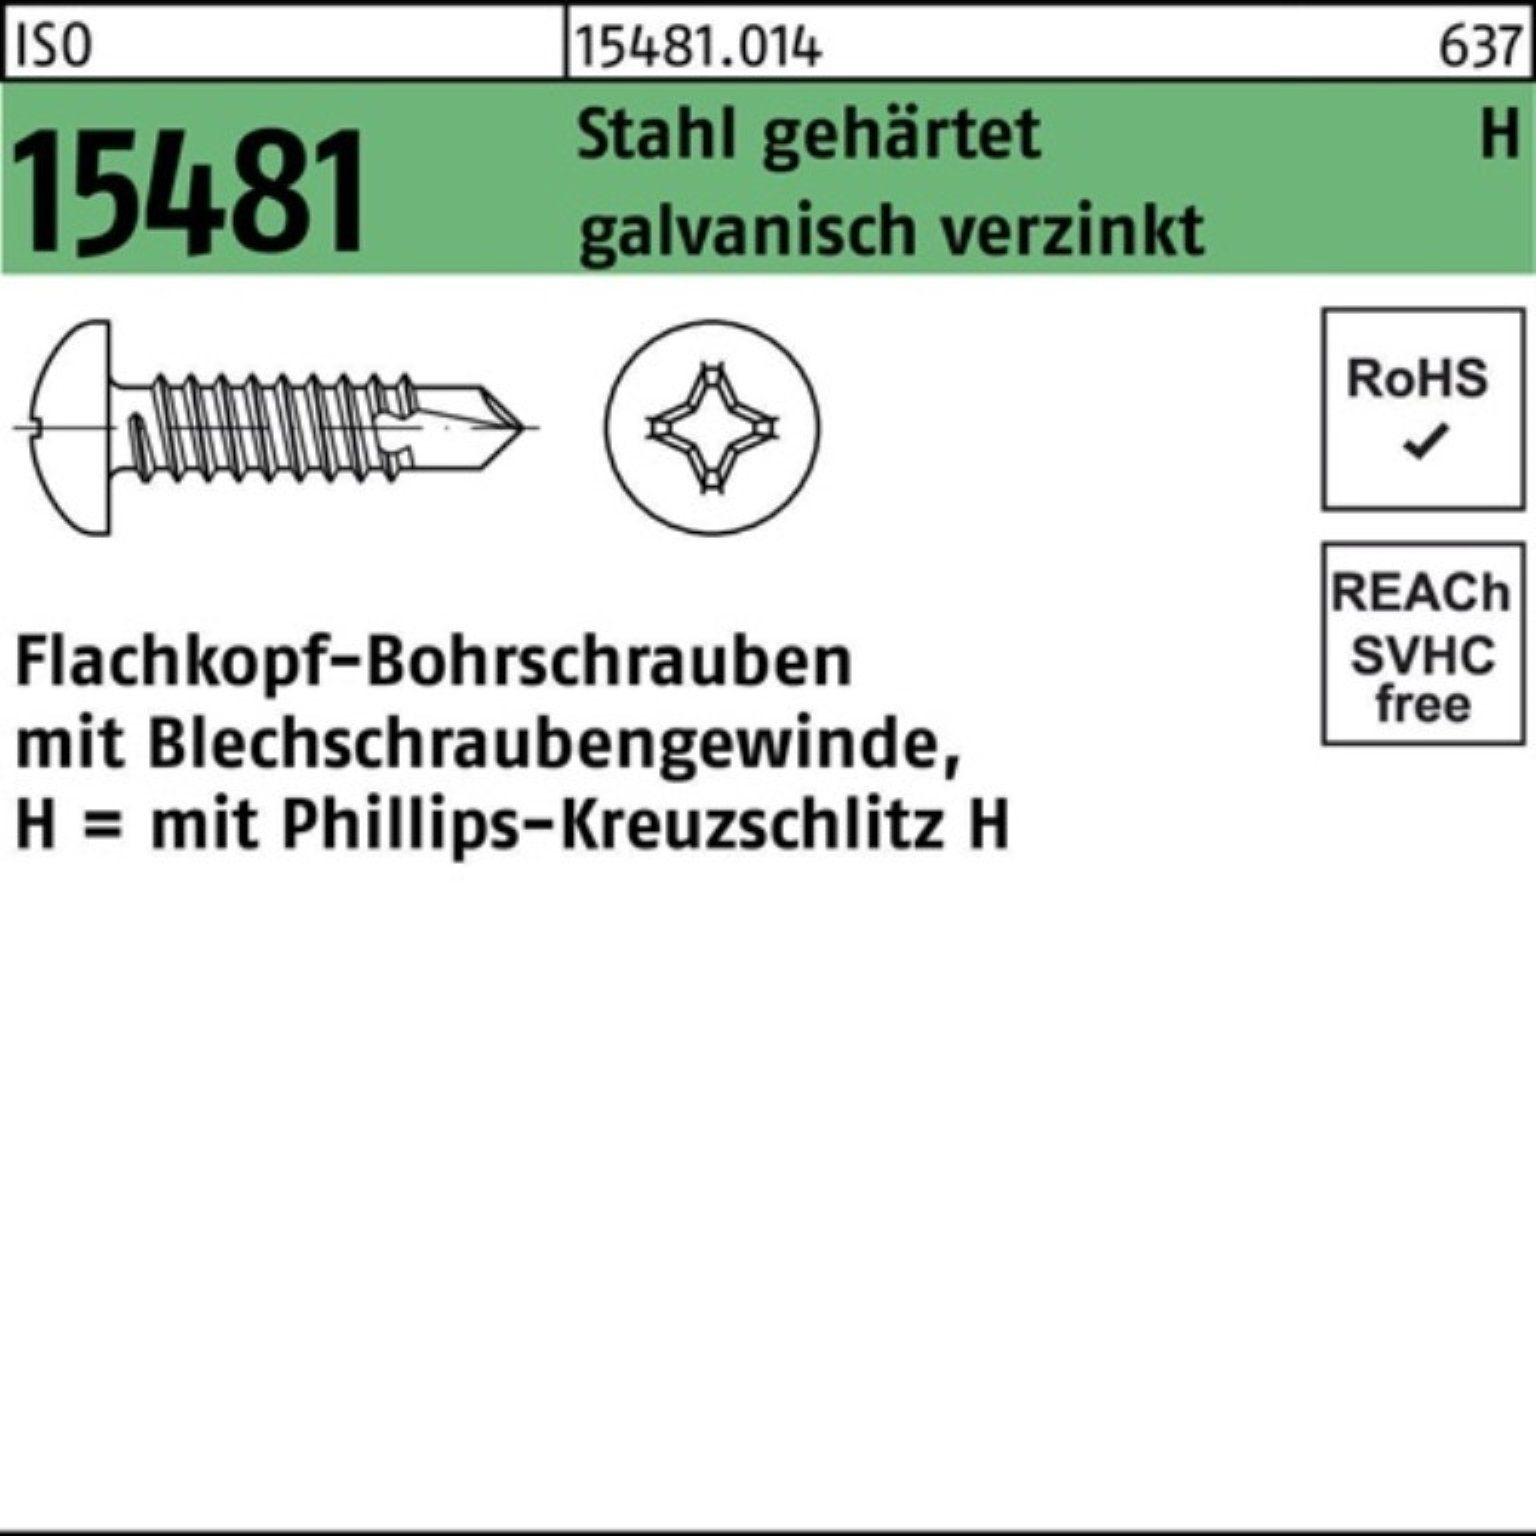 Reyher Bohrschraube 4,8x90-H Pack 15481 FLAKObohrschraube PH ISO 250er Stahl ST gehärtet